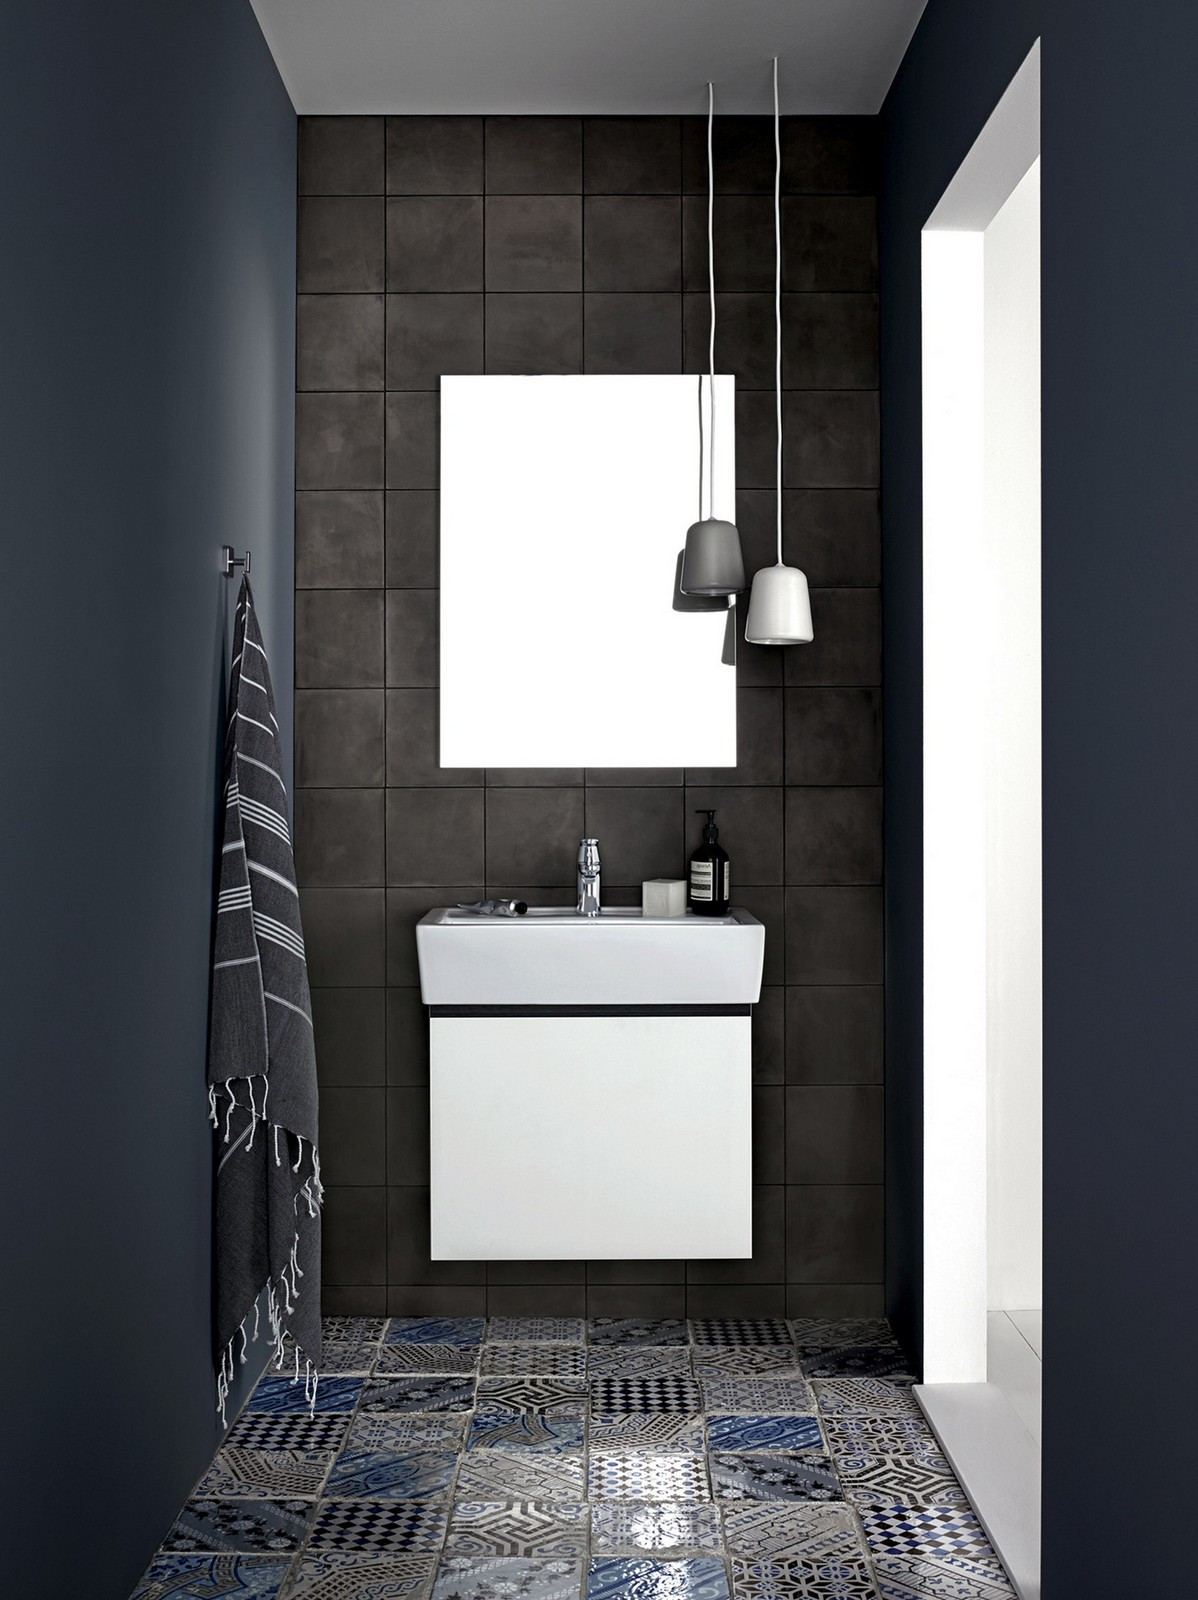 Bathroom Pendant Lights Over Vanity
 6 Smart Ideas Where to Use Pendant Lighting